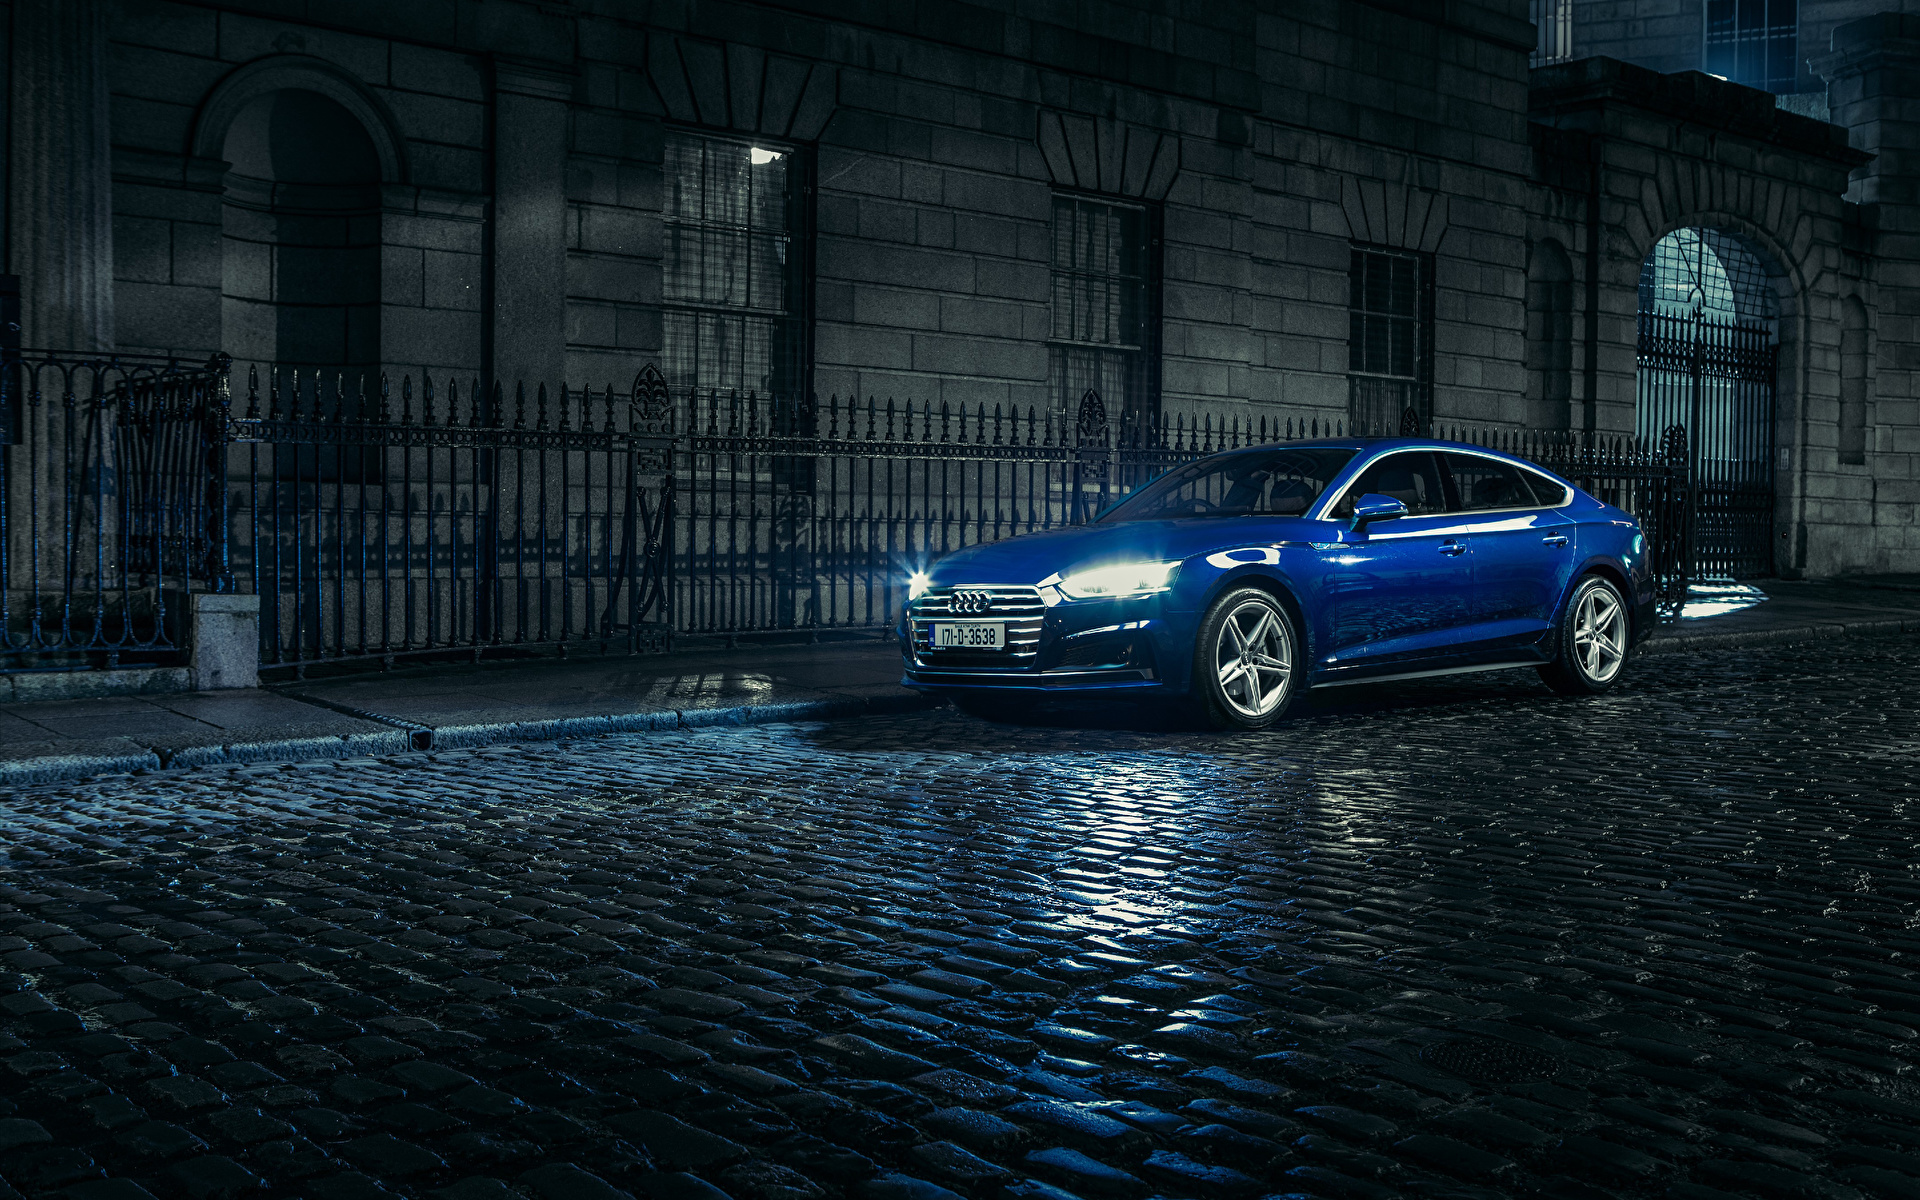 Image Audi A5 Sportback Tdi Quattro S Line Blue